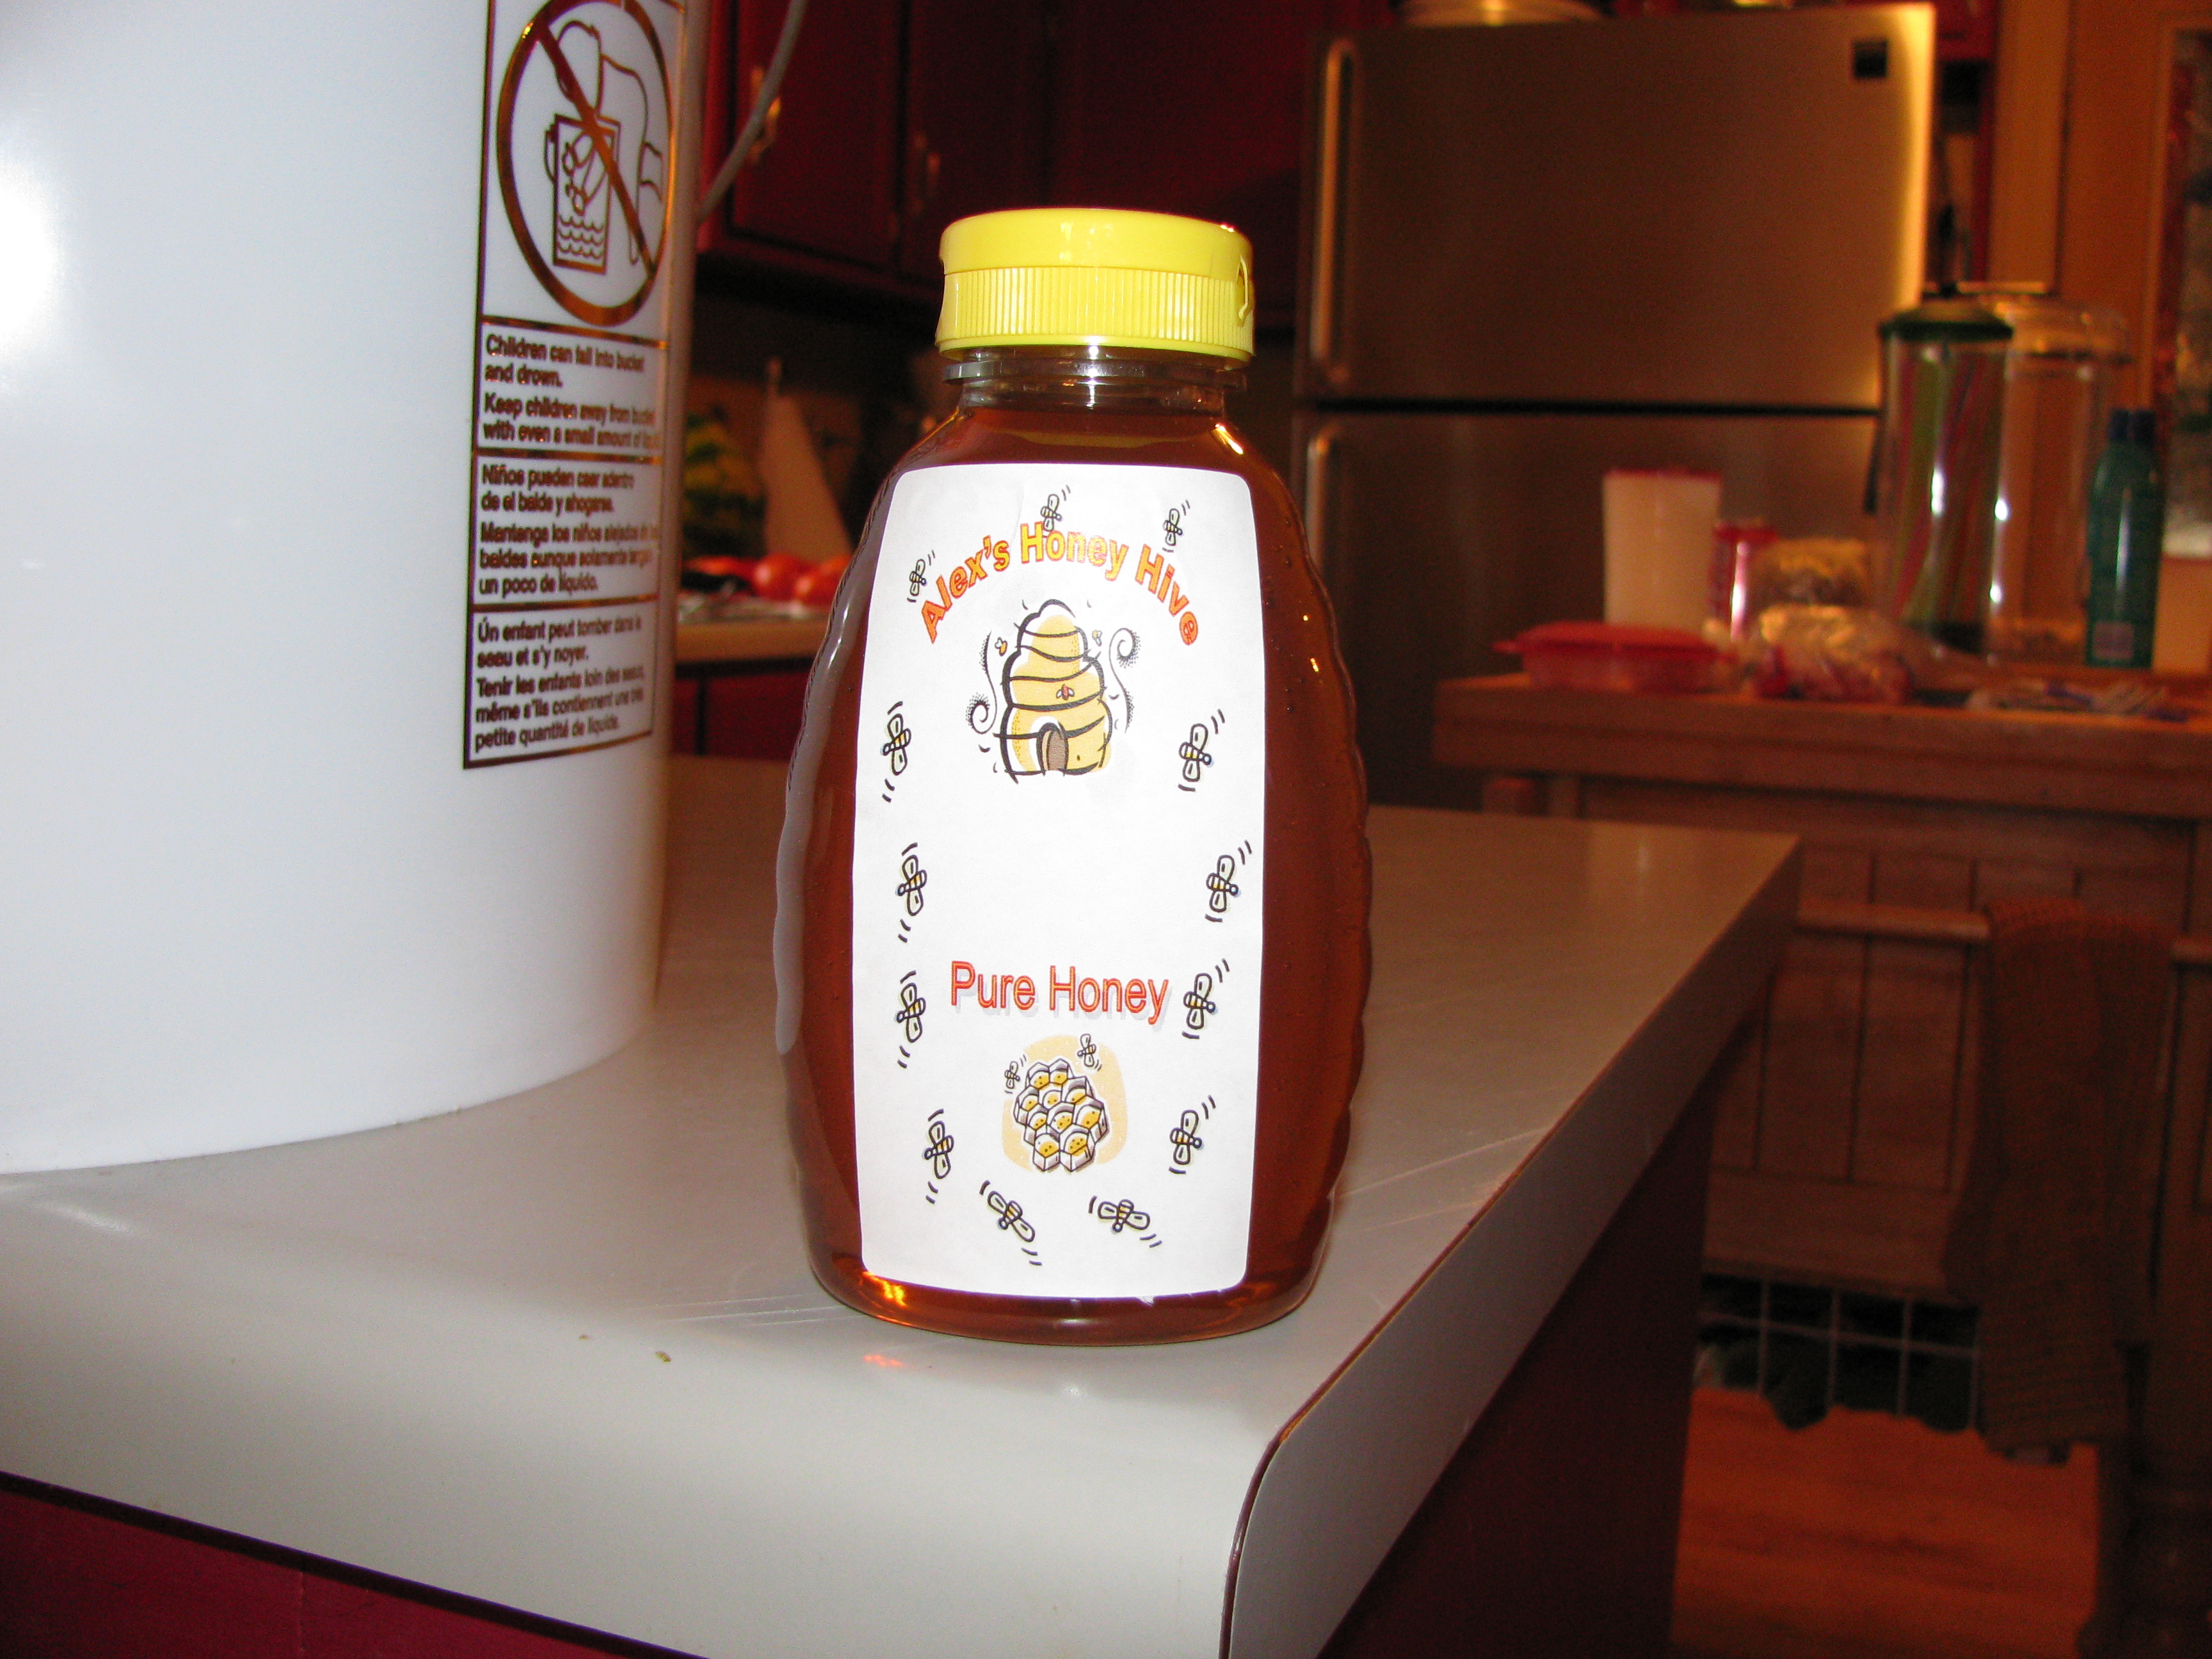 1 lb jar of Alex's Private Label Local Loganville Honey